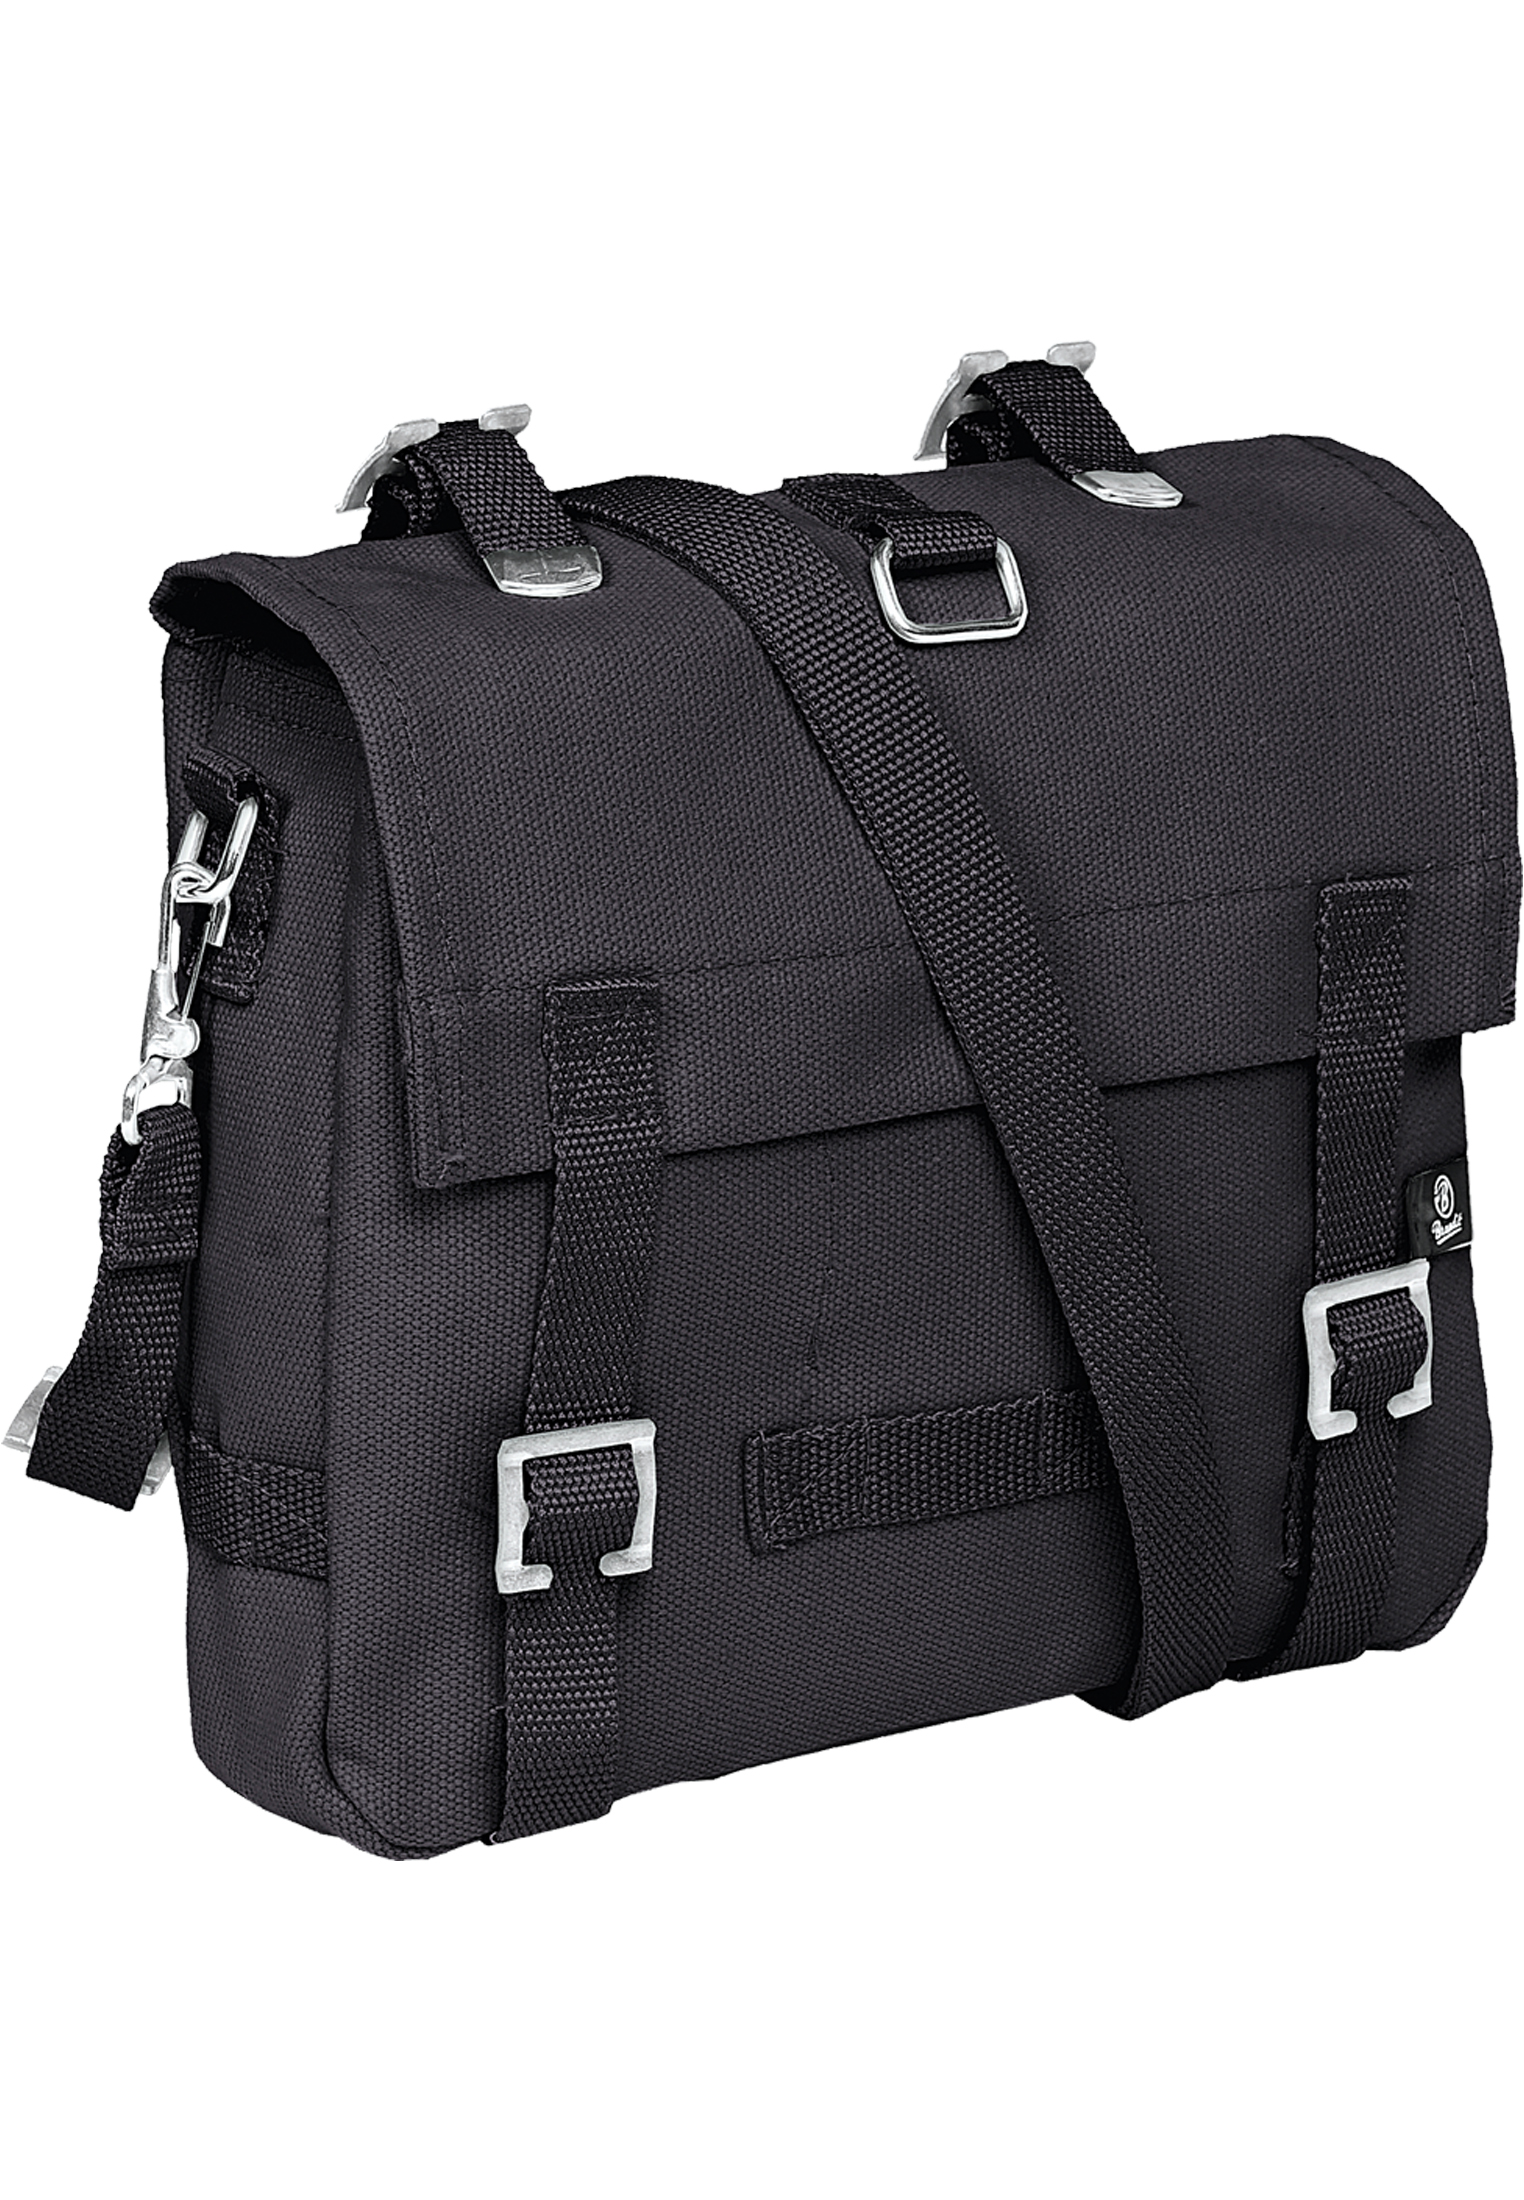 Taschen Small Military Bag in Farbe black